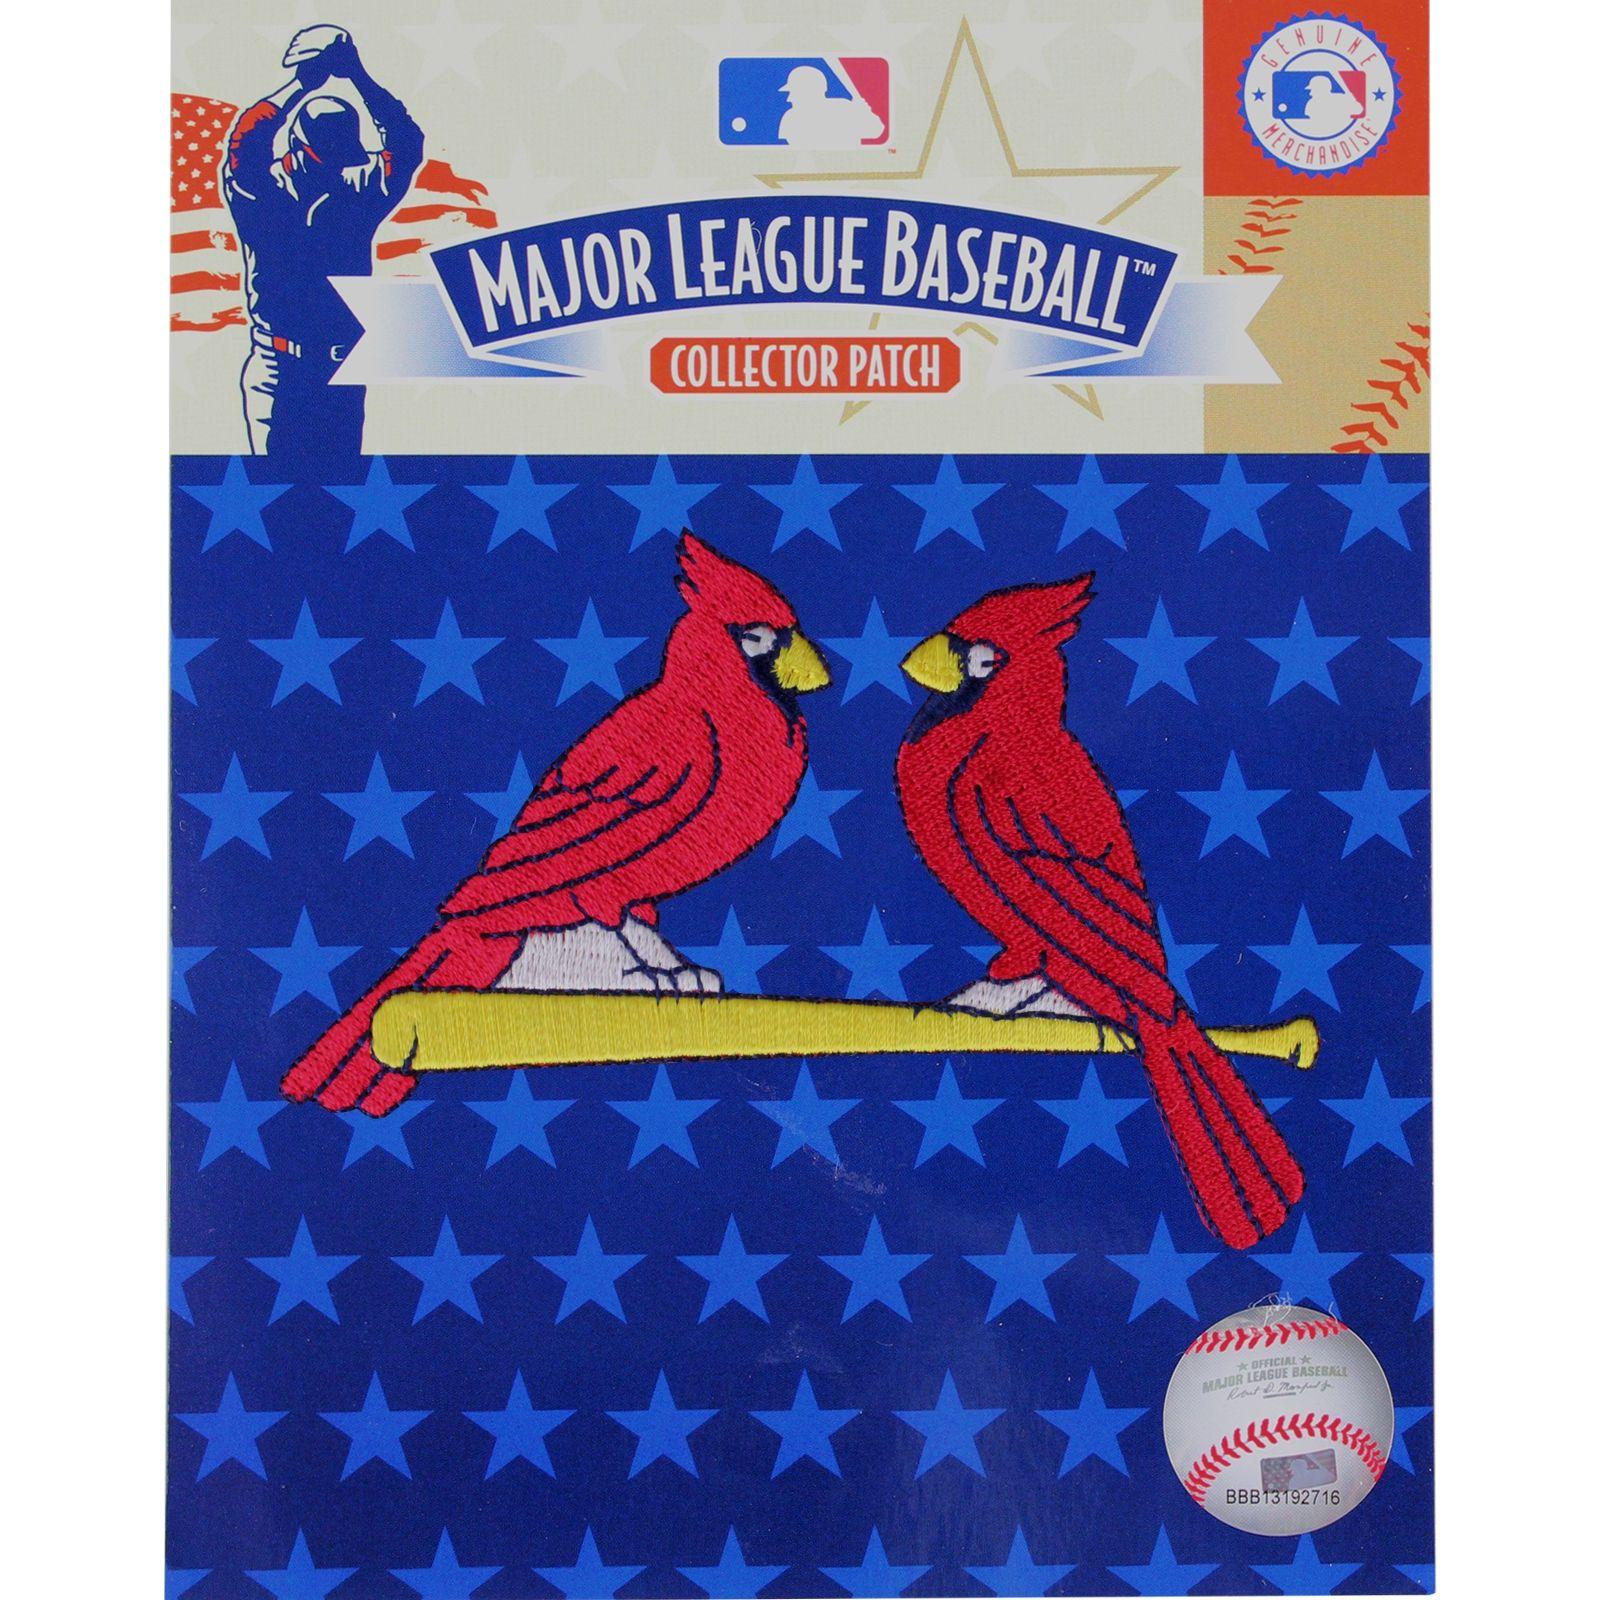 The Birds On Bat Cardinals Logo - St. Louis Cardinals Team Red Birds On Bat Logo Sleeve Patch Jersey ...